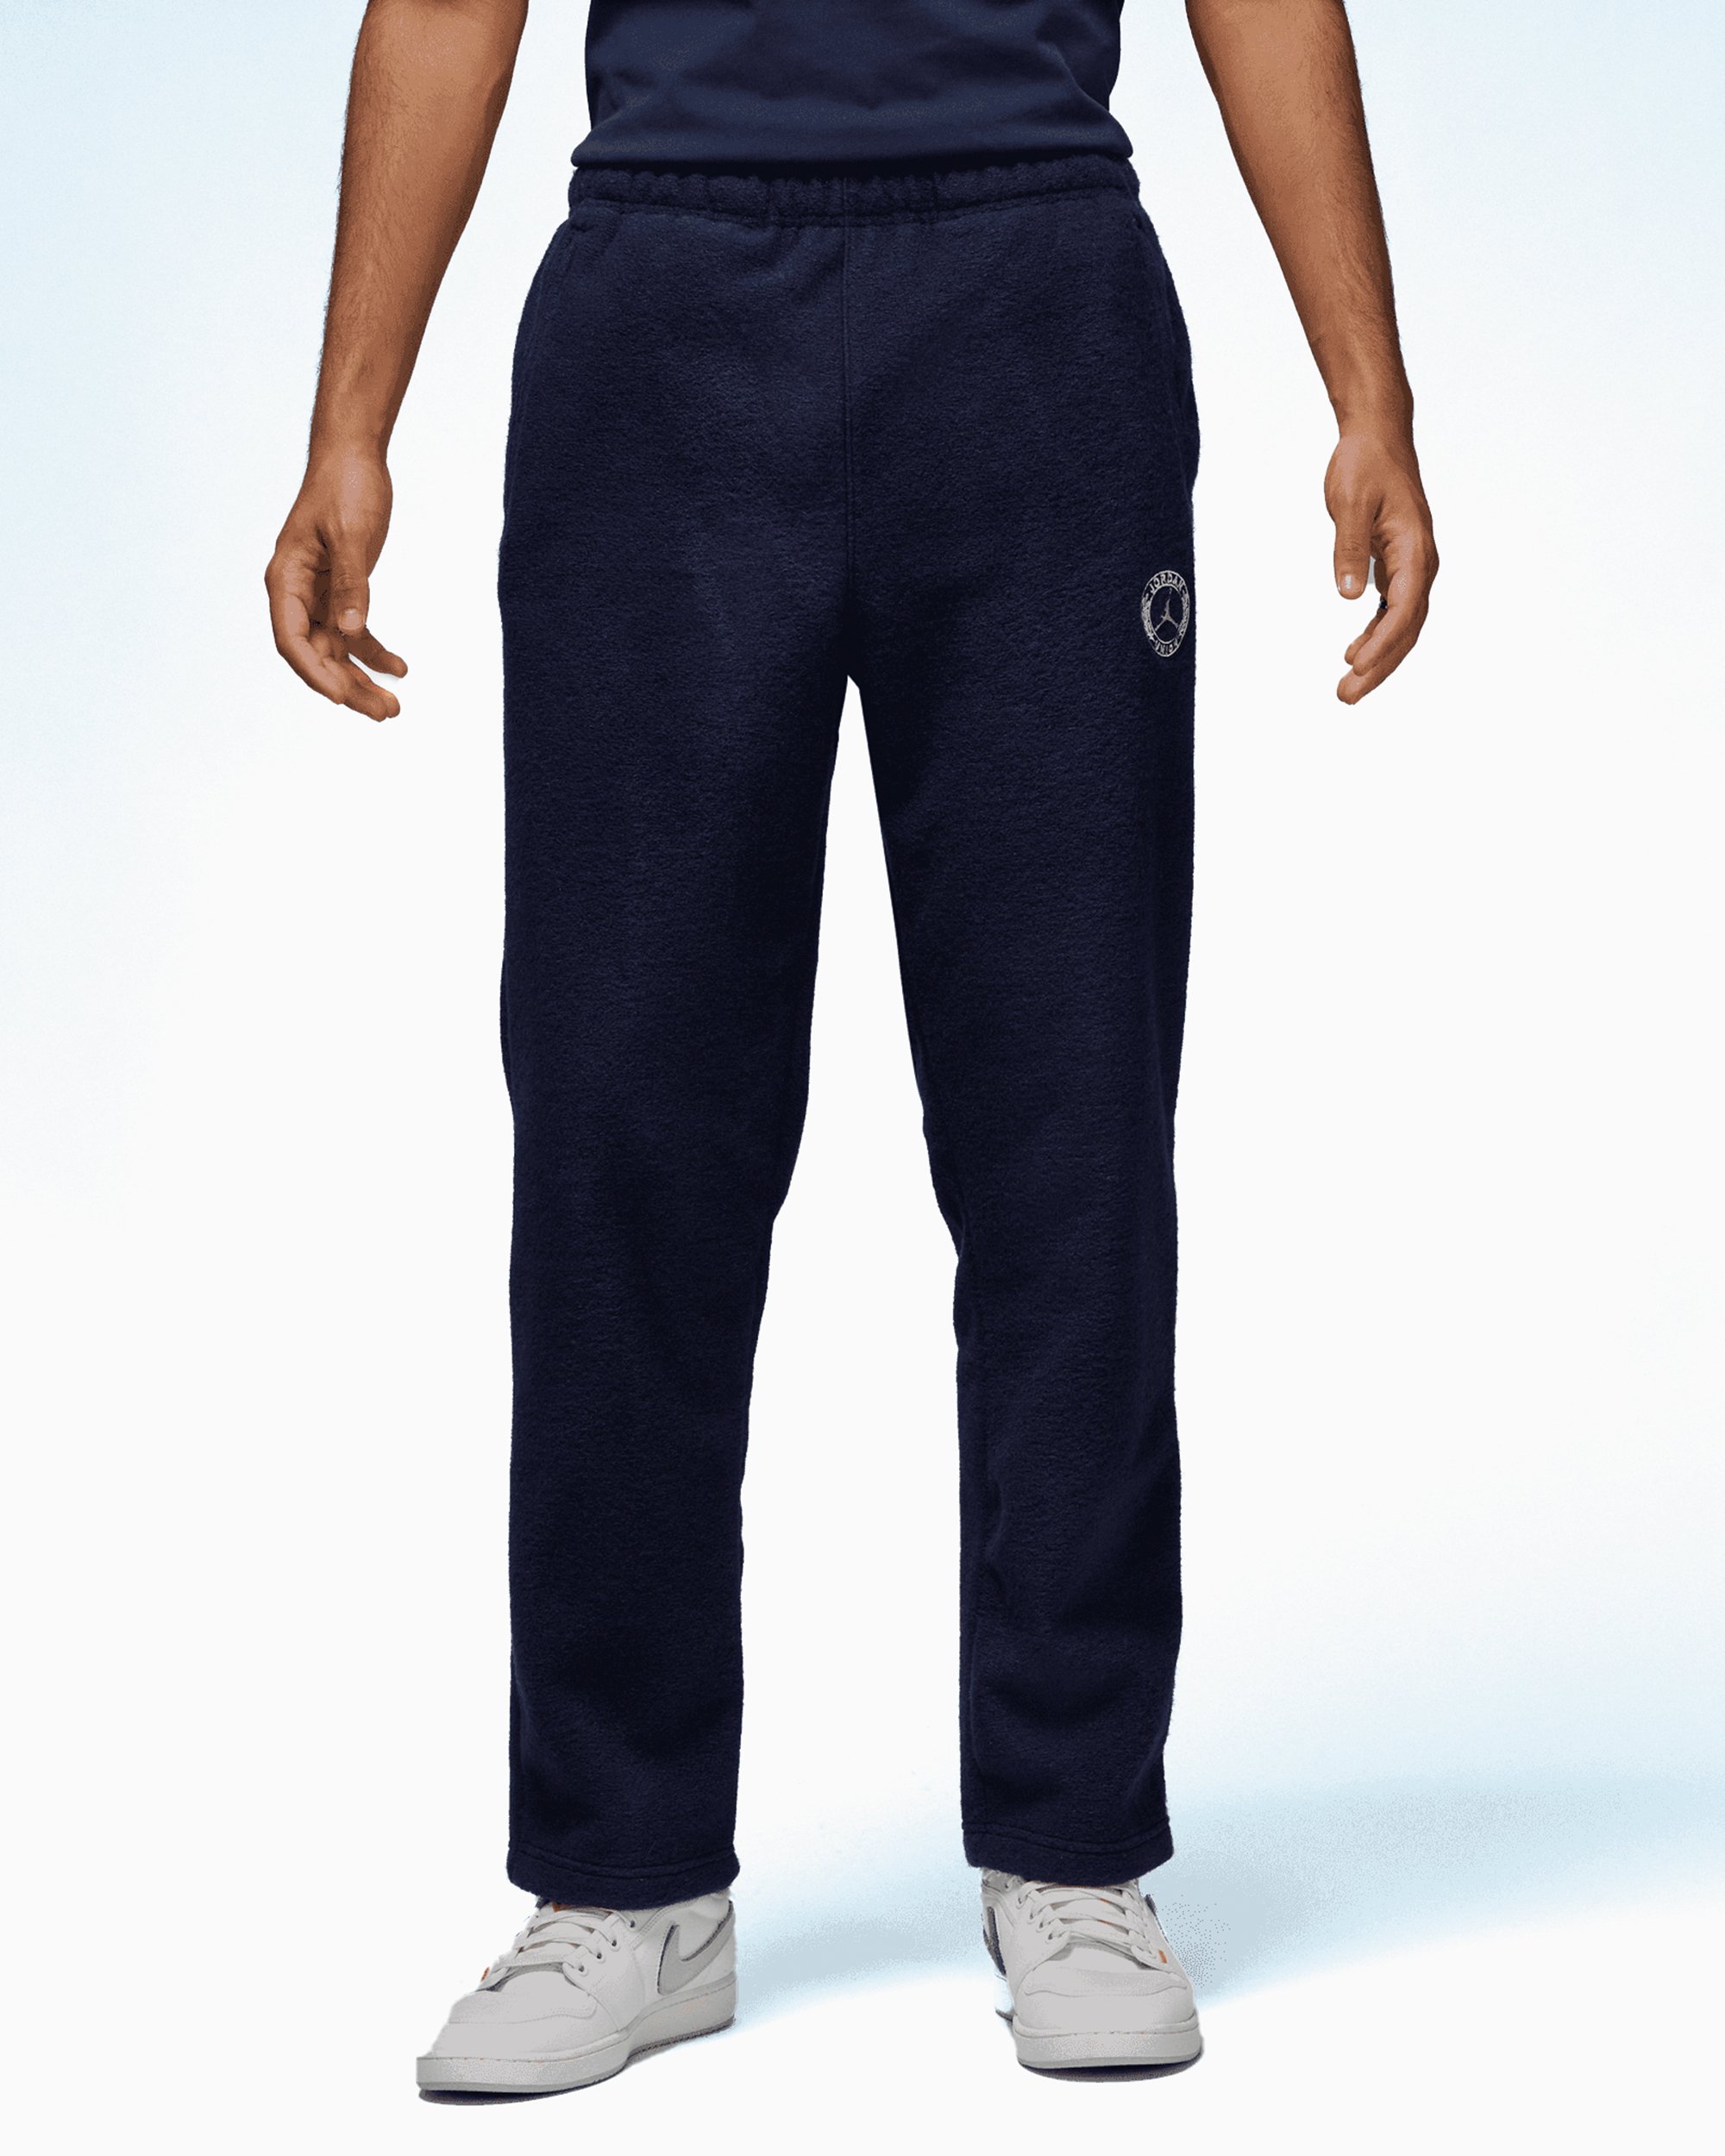 Jordan x UNION Men's Track Pants Blue DV7353-419 | FOOTDISTRICT